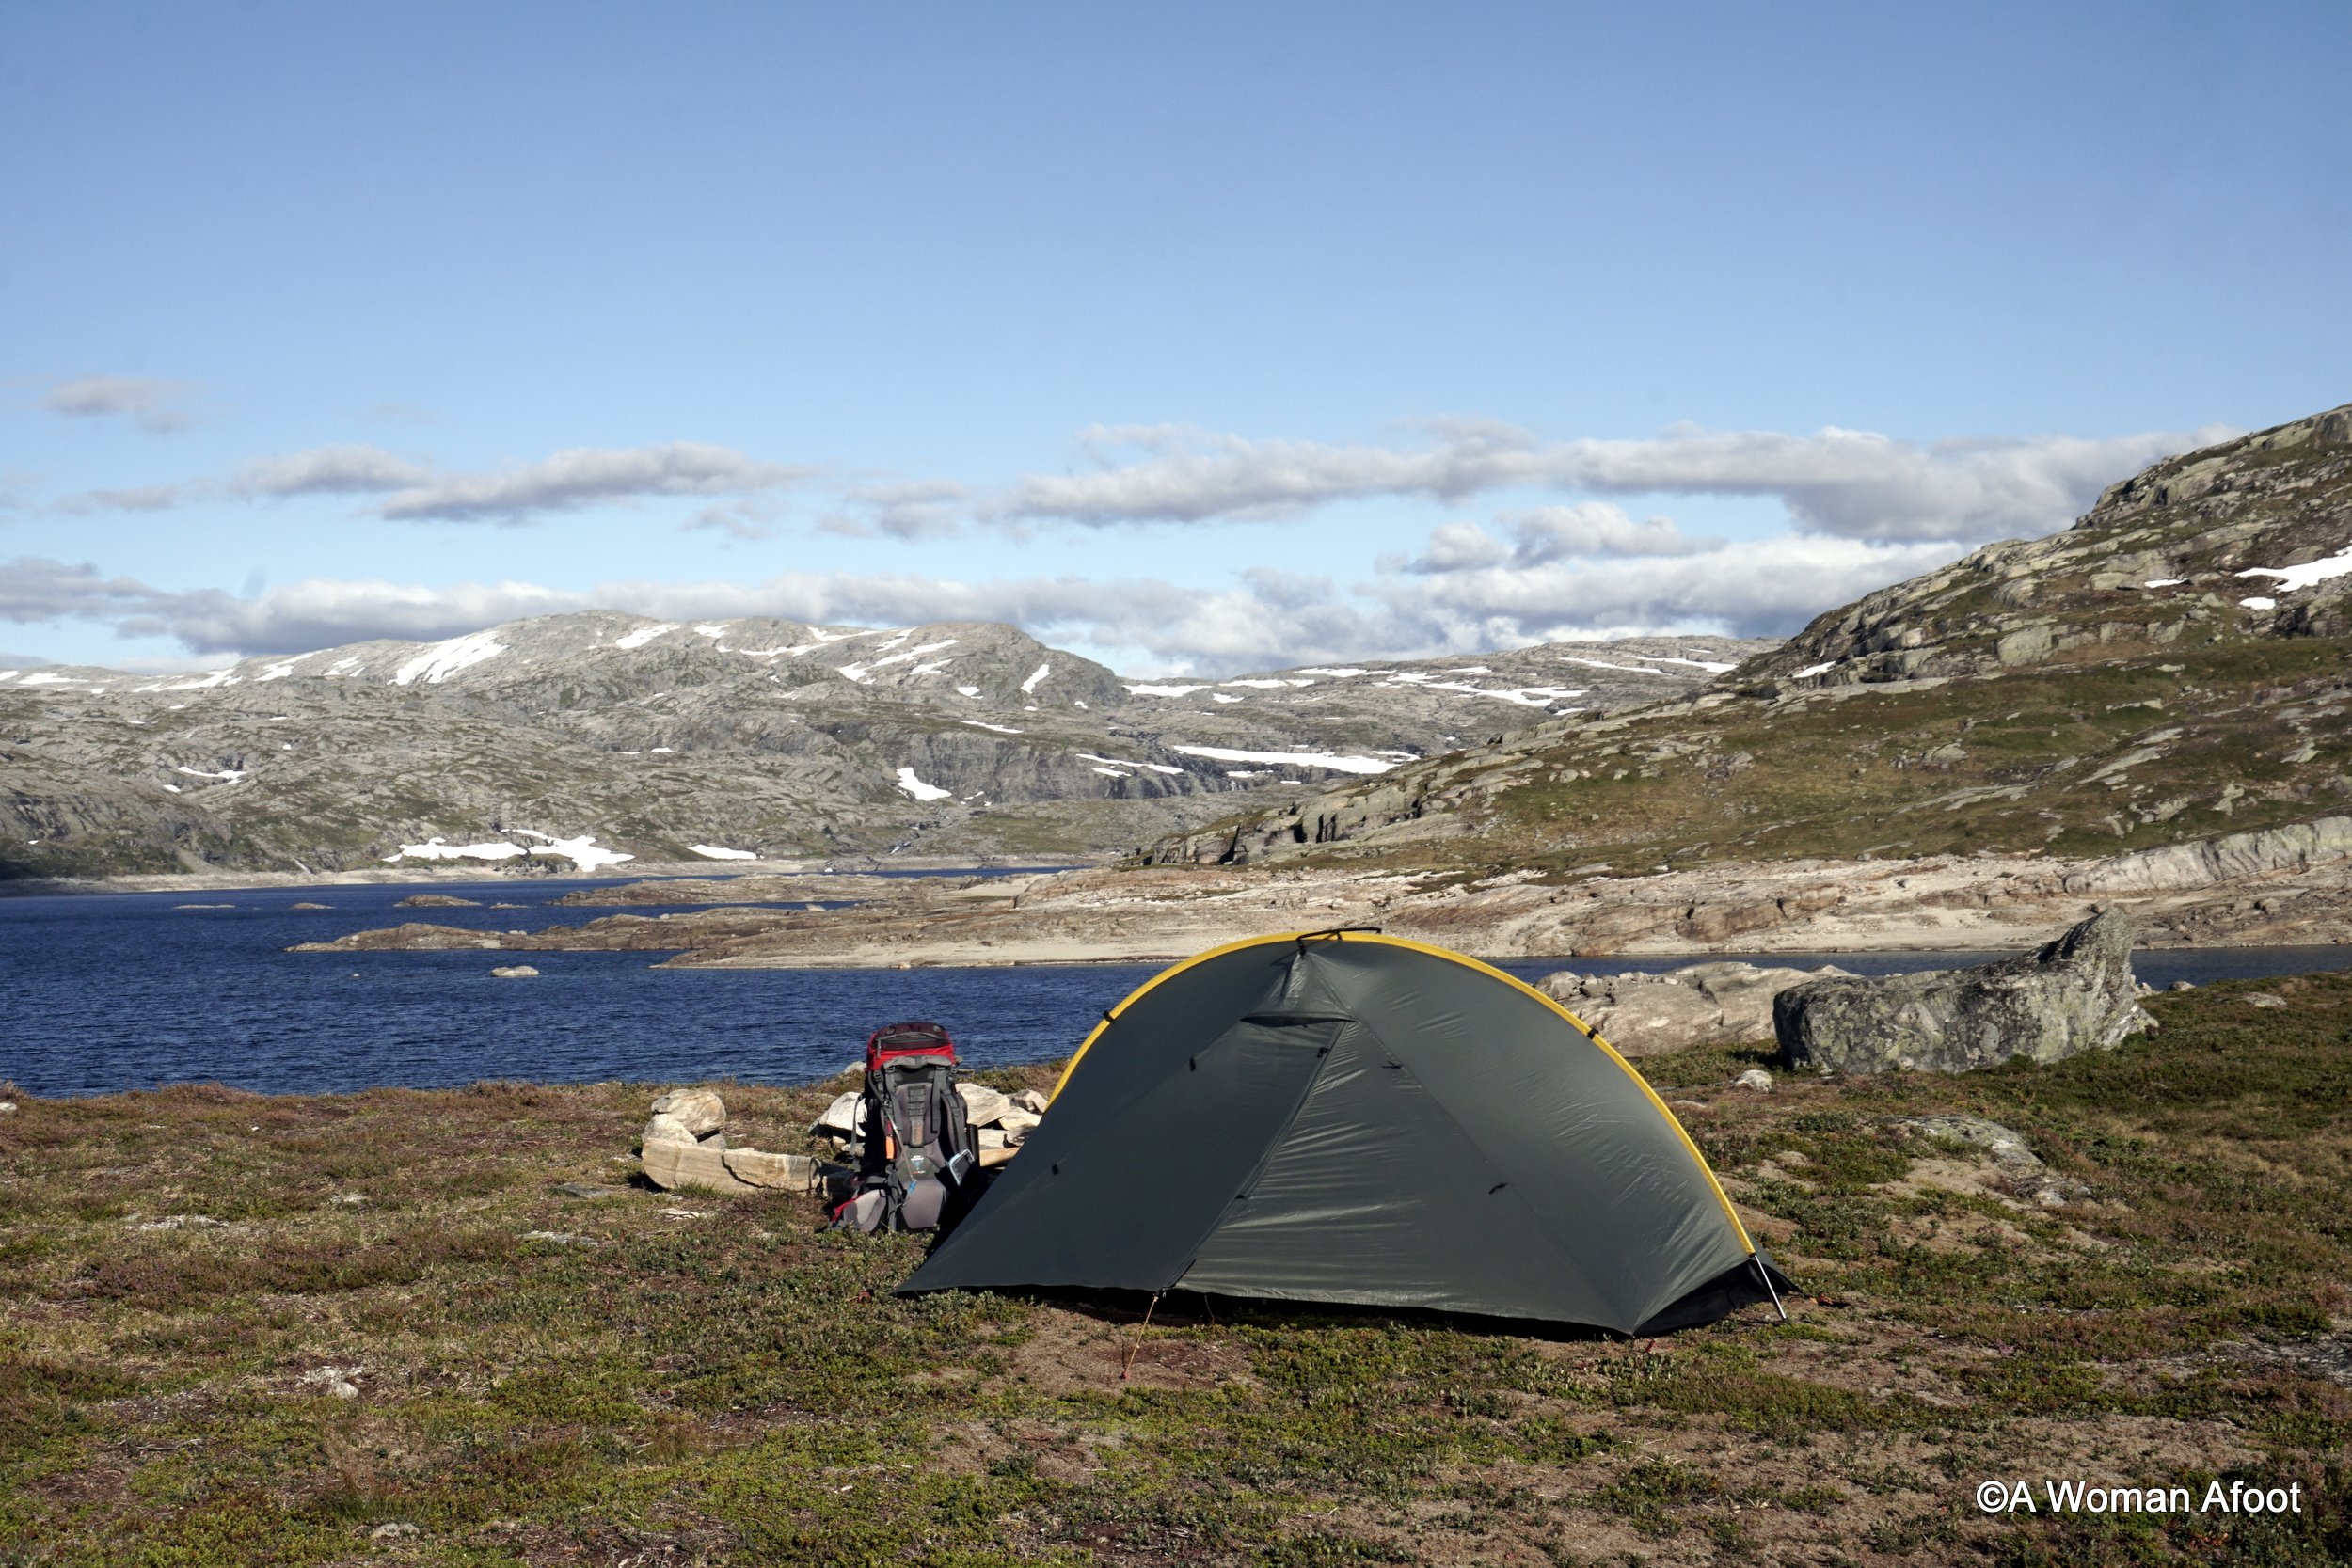 https://images.squarespace-cdn.com/content/v1/59fdb3ef692ebe060b7f31c7/1535628367056-LGF4RMDZYDIHPITMYO7R/hiking+camping+solo+in+Norway+female